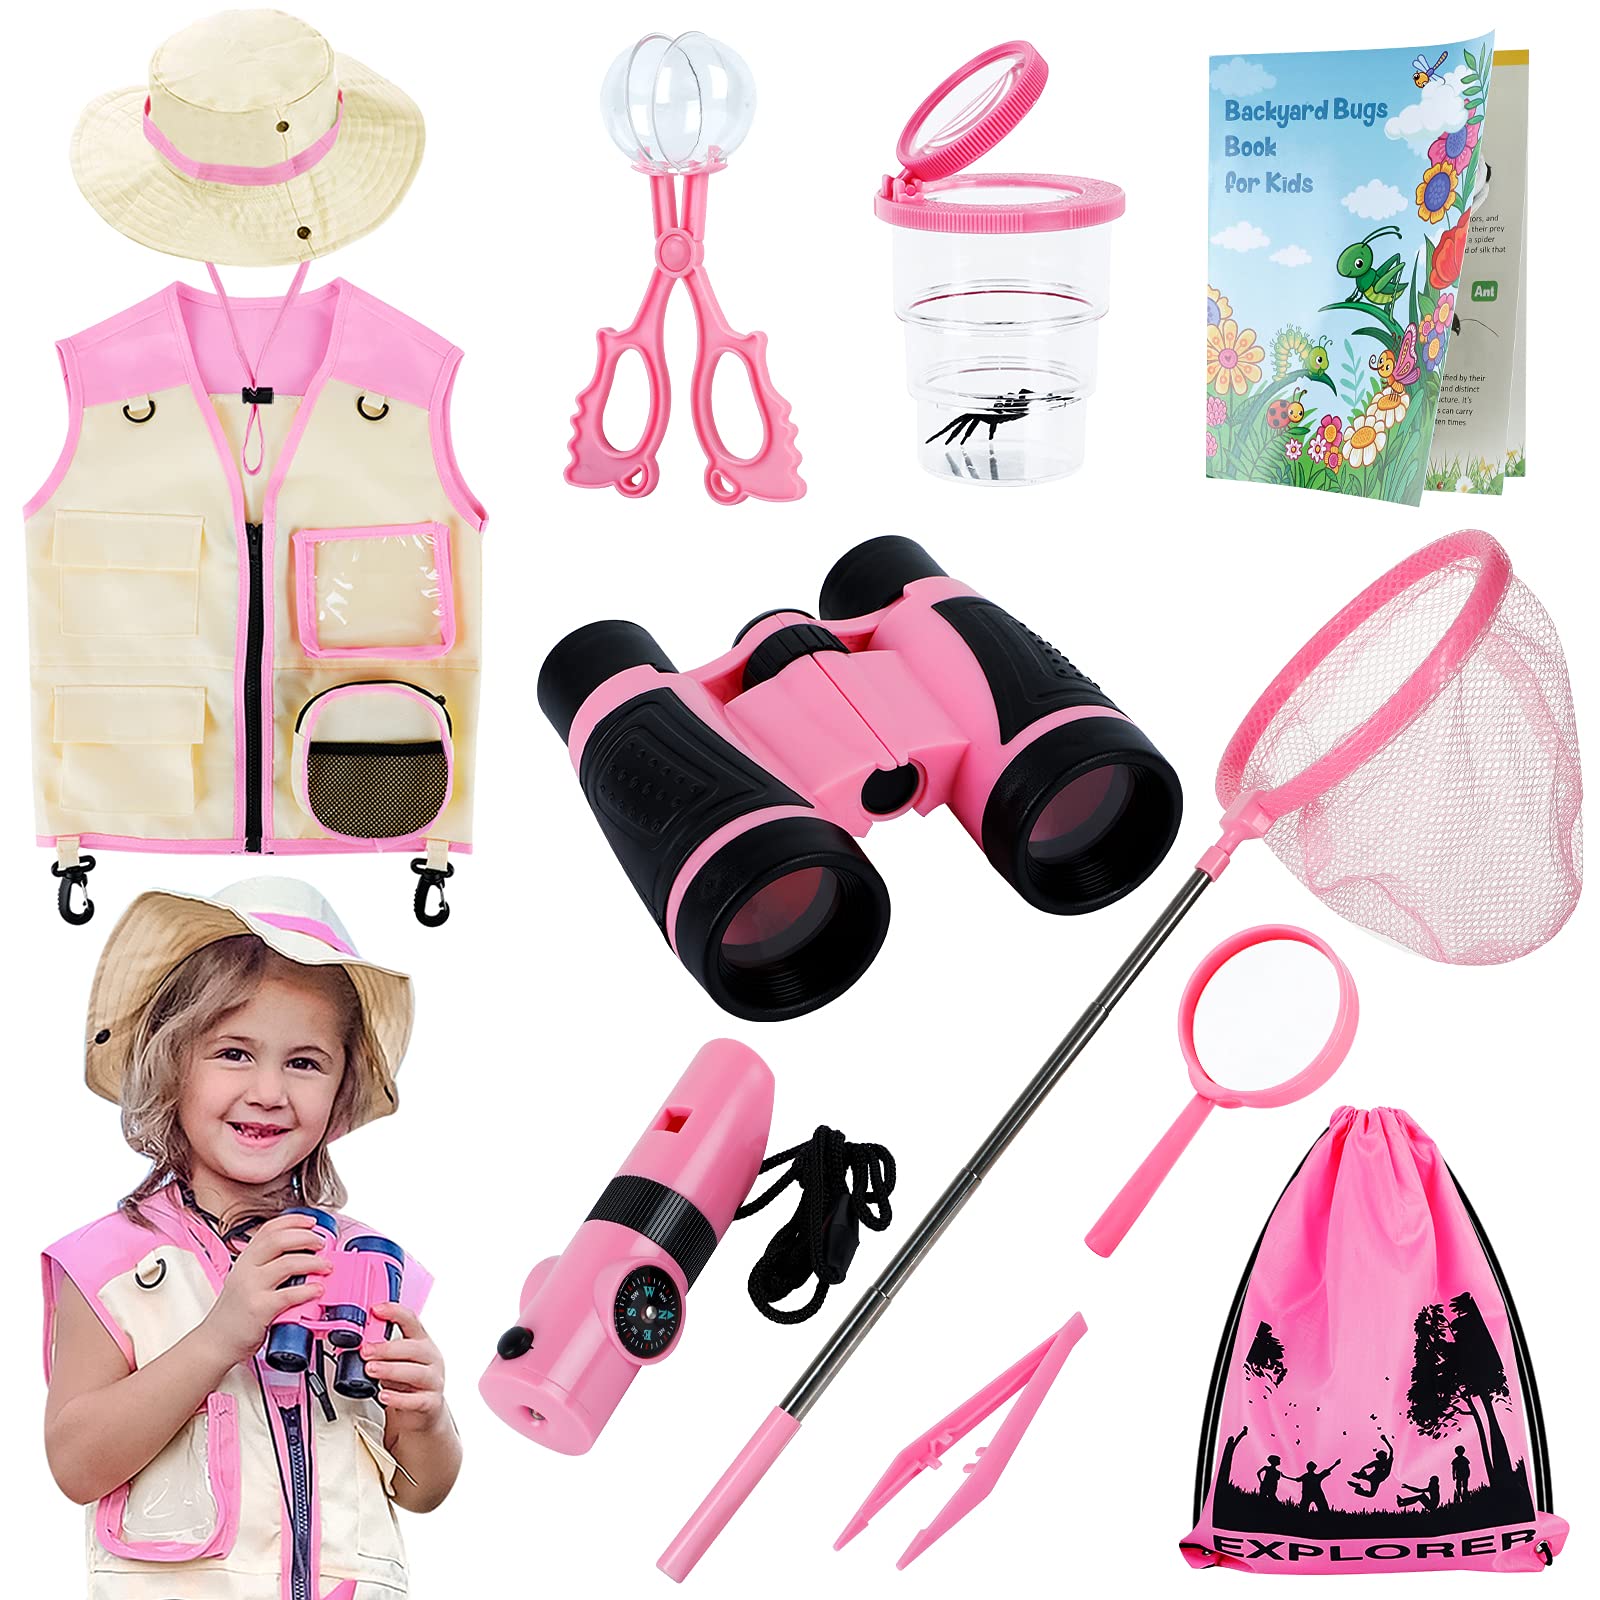 INNOCHEER Explorer Kit & Bug Catcher Kit for Kids Outdoor Exploration for Boys Girls 3-12 Years Old (The Pink)